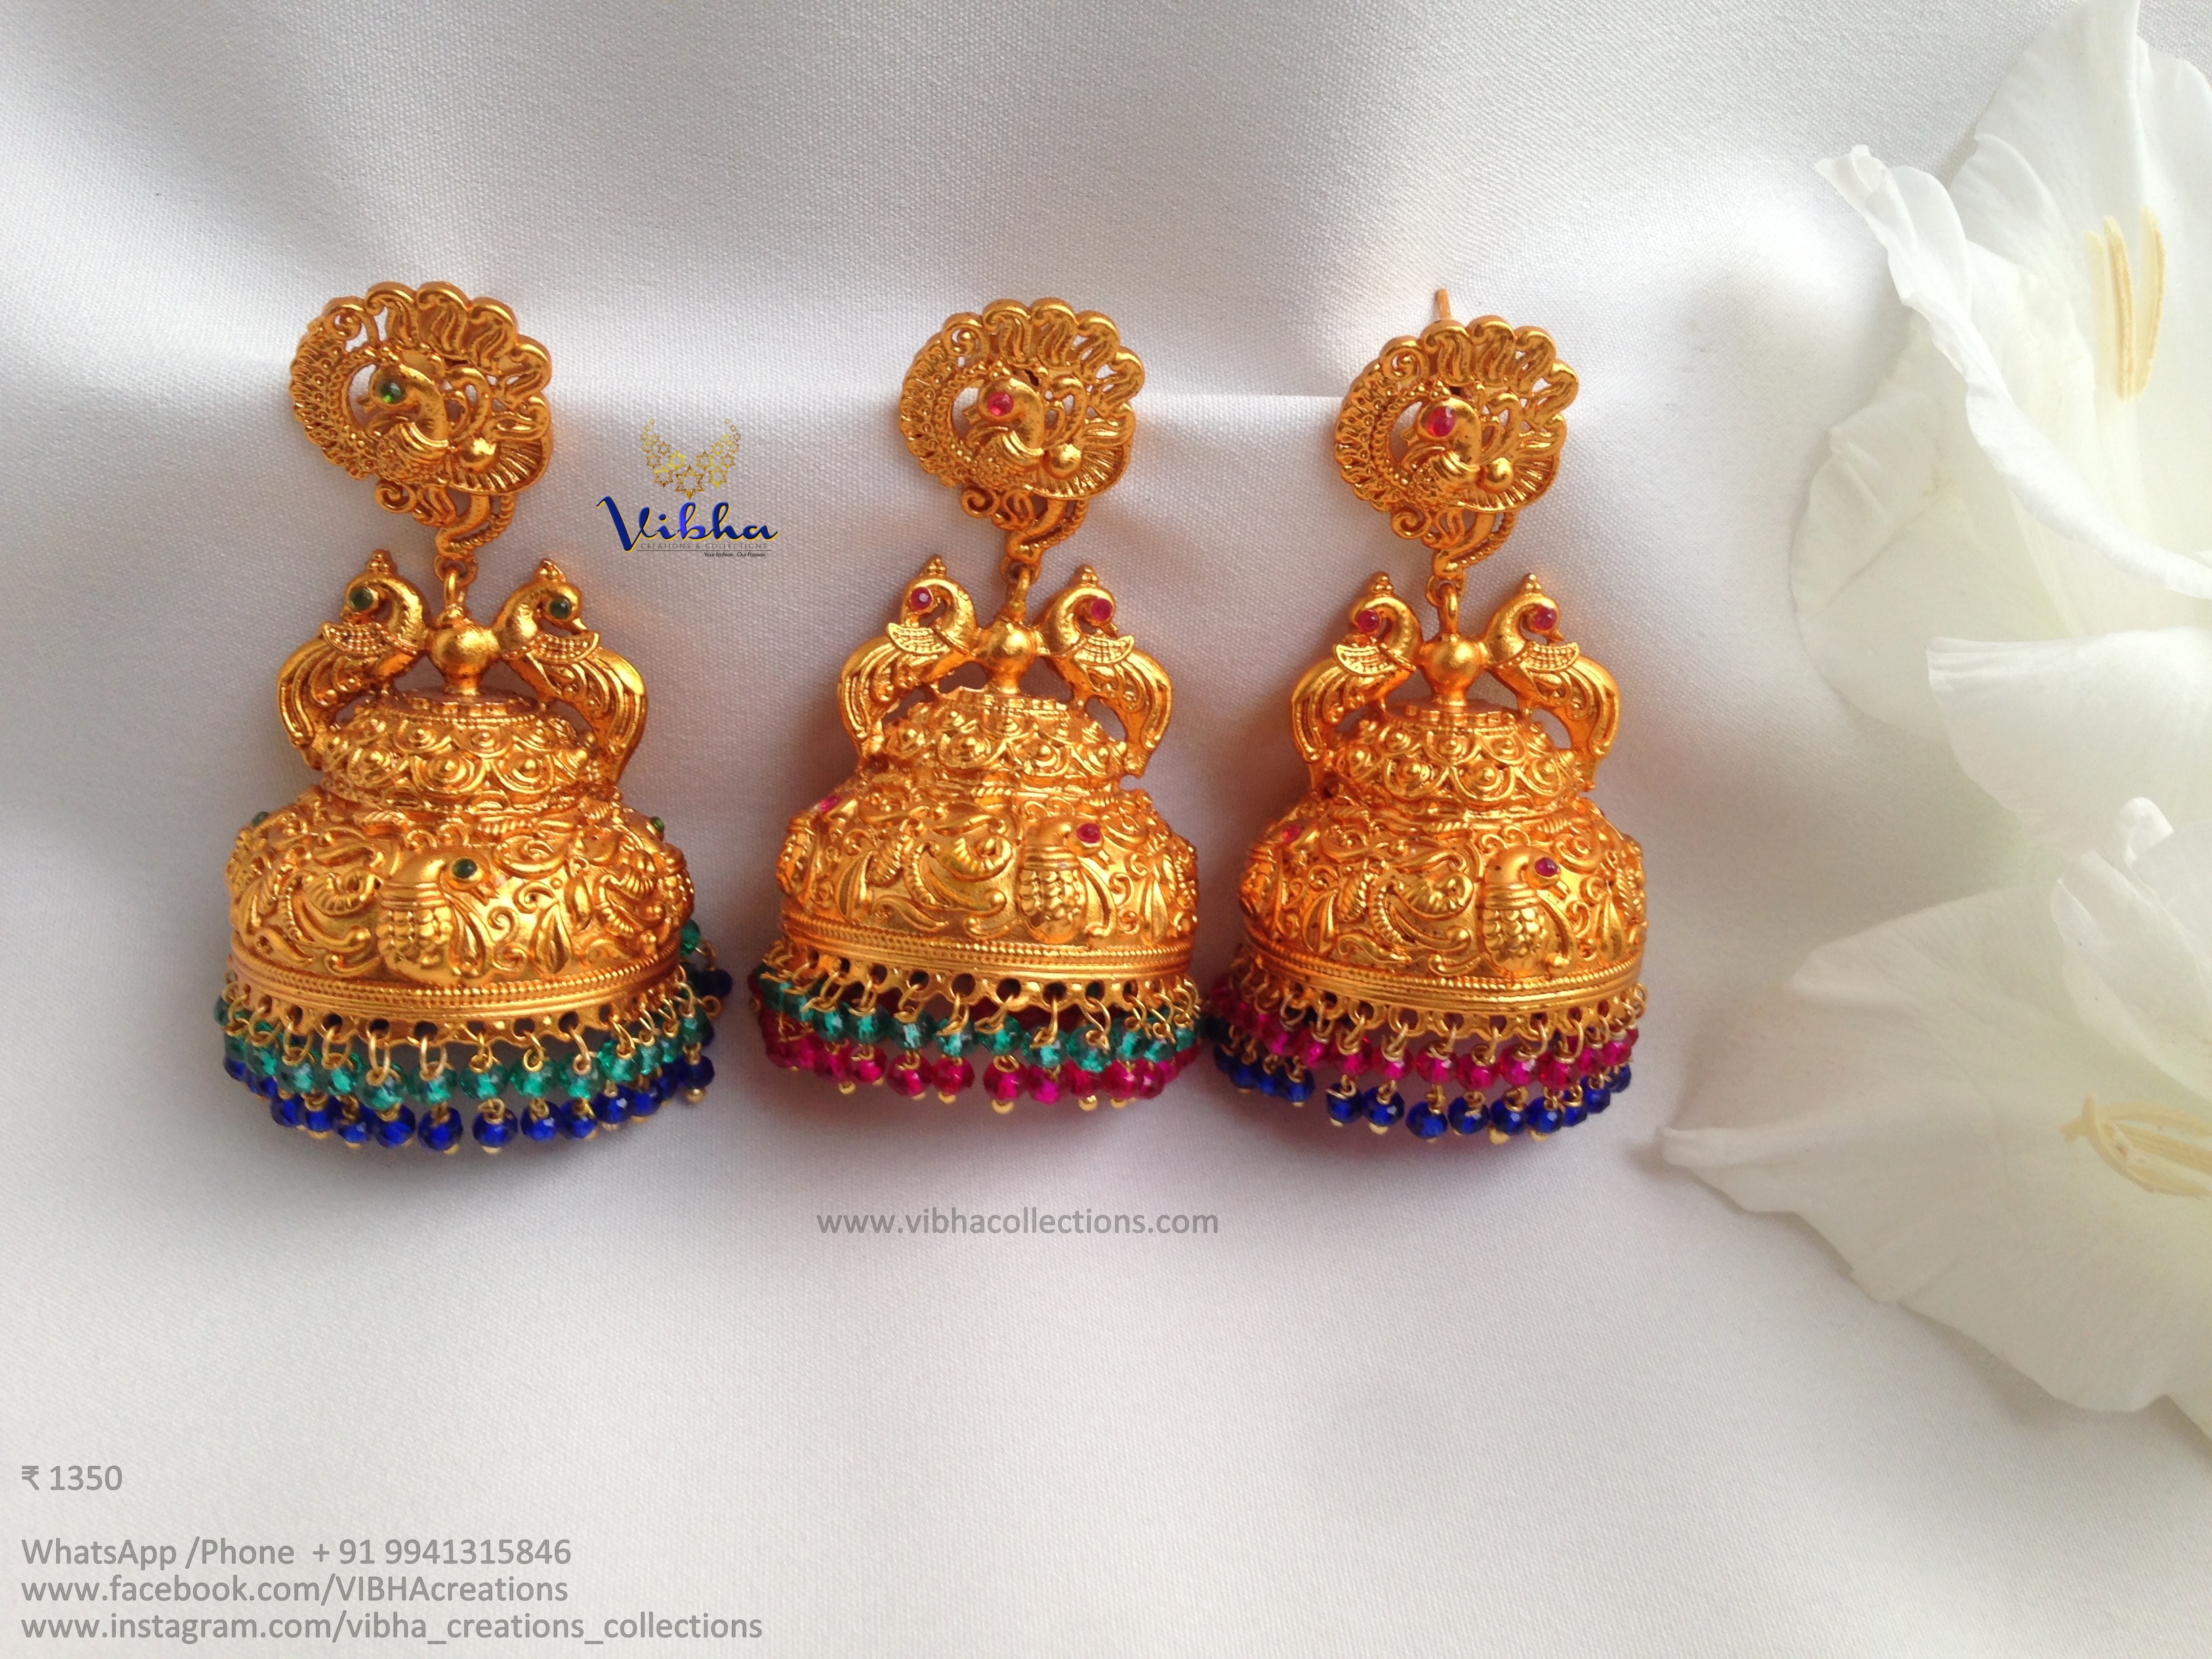 Vibha jeweller